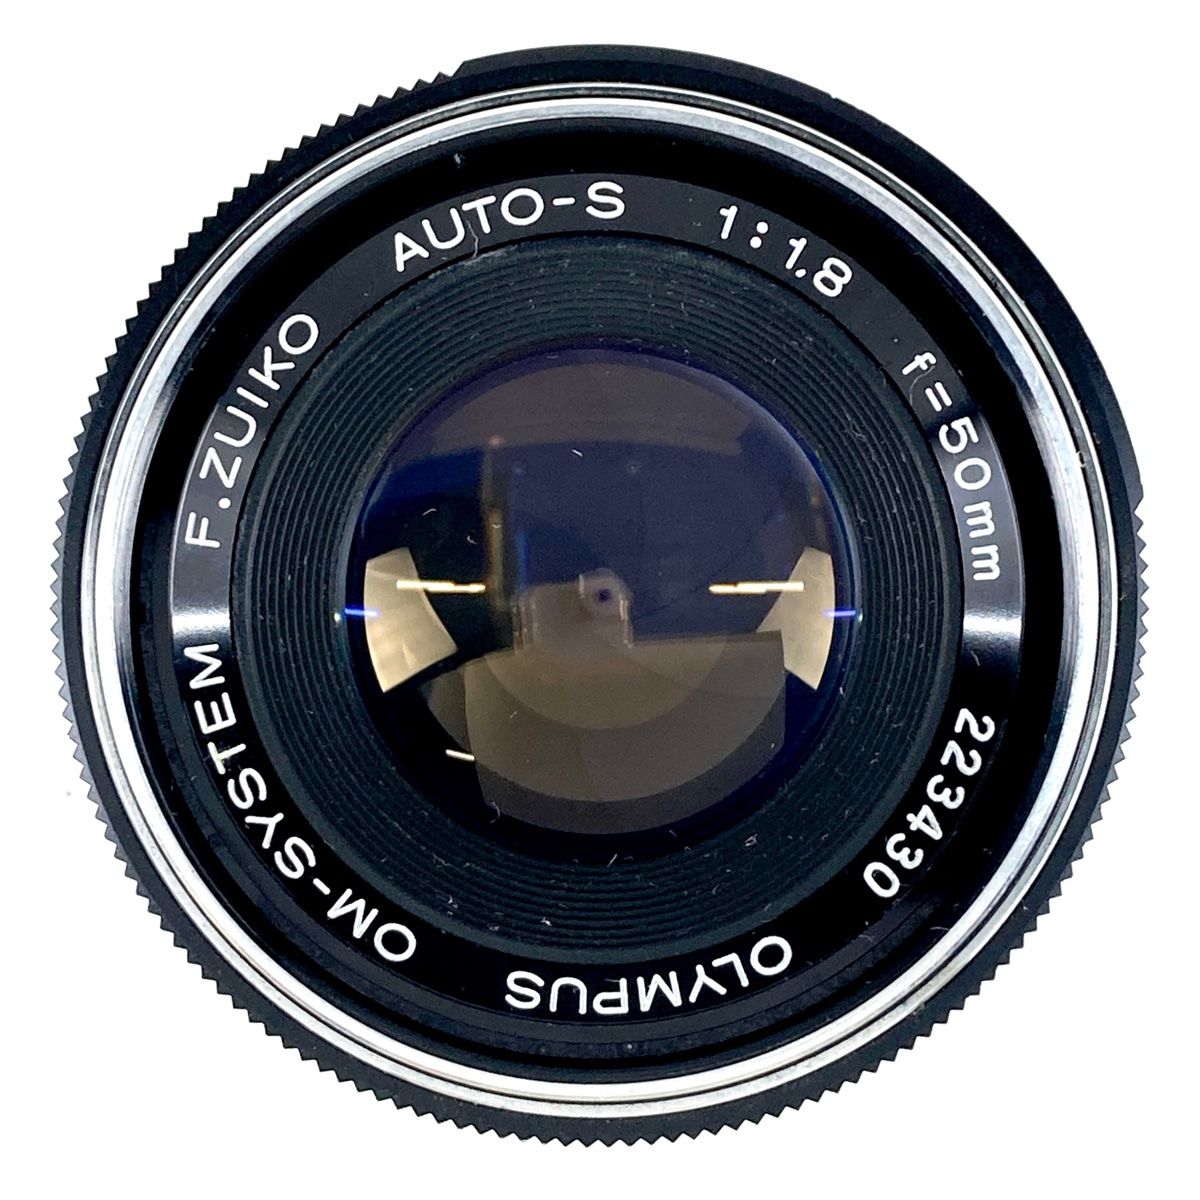 102 OLYMPUS OM-2 35ミリフィルムカメラ Black /ZUIKO MC AUTO-S f1.8